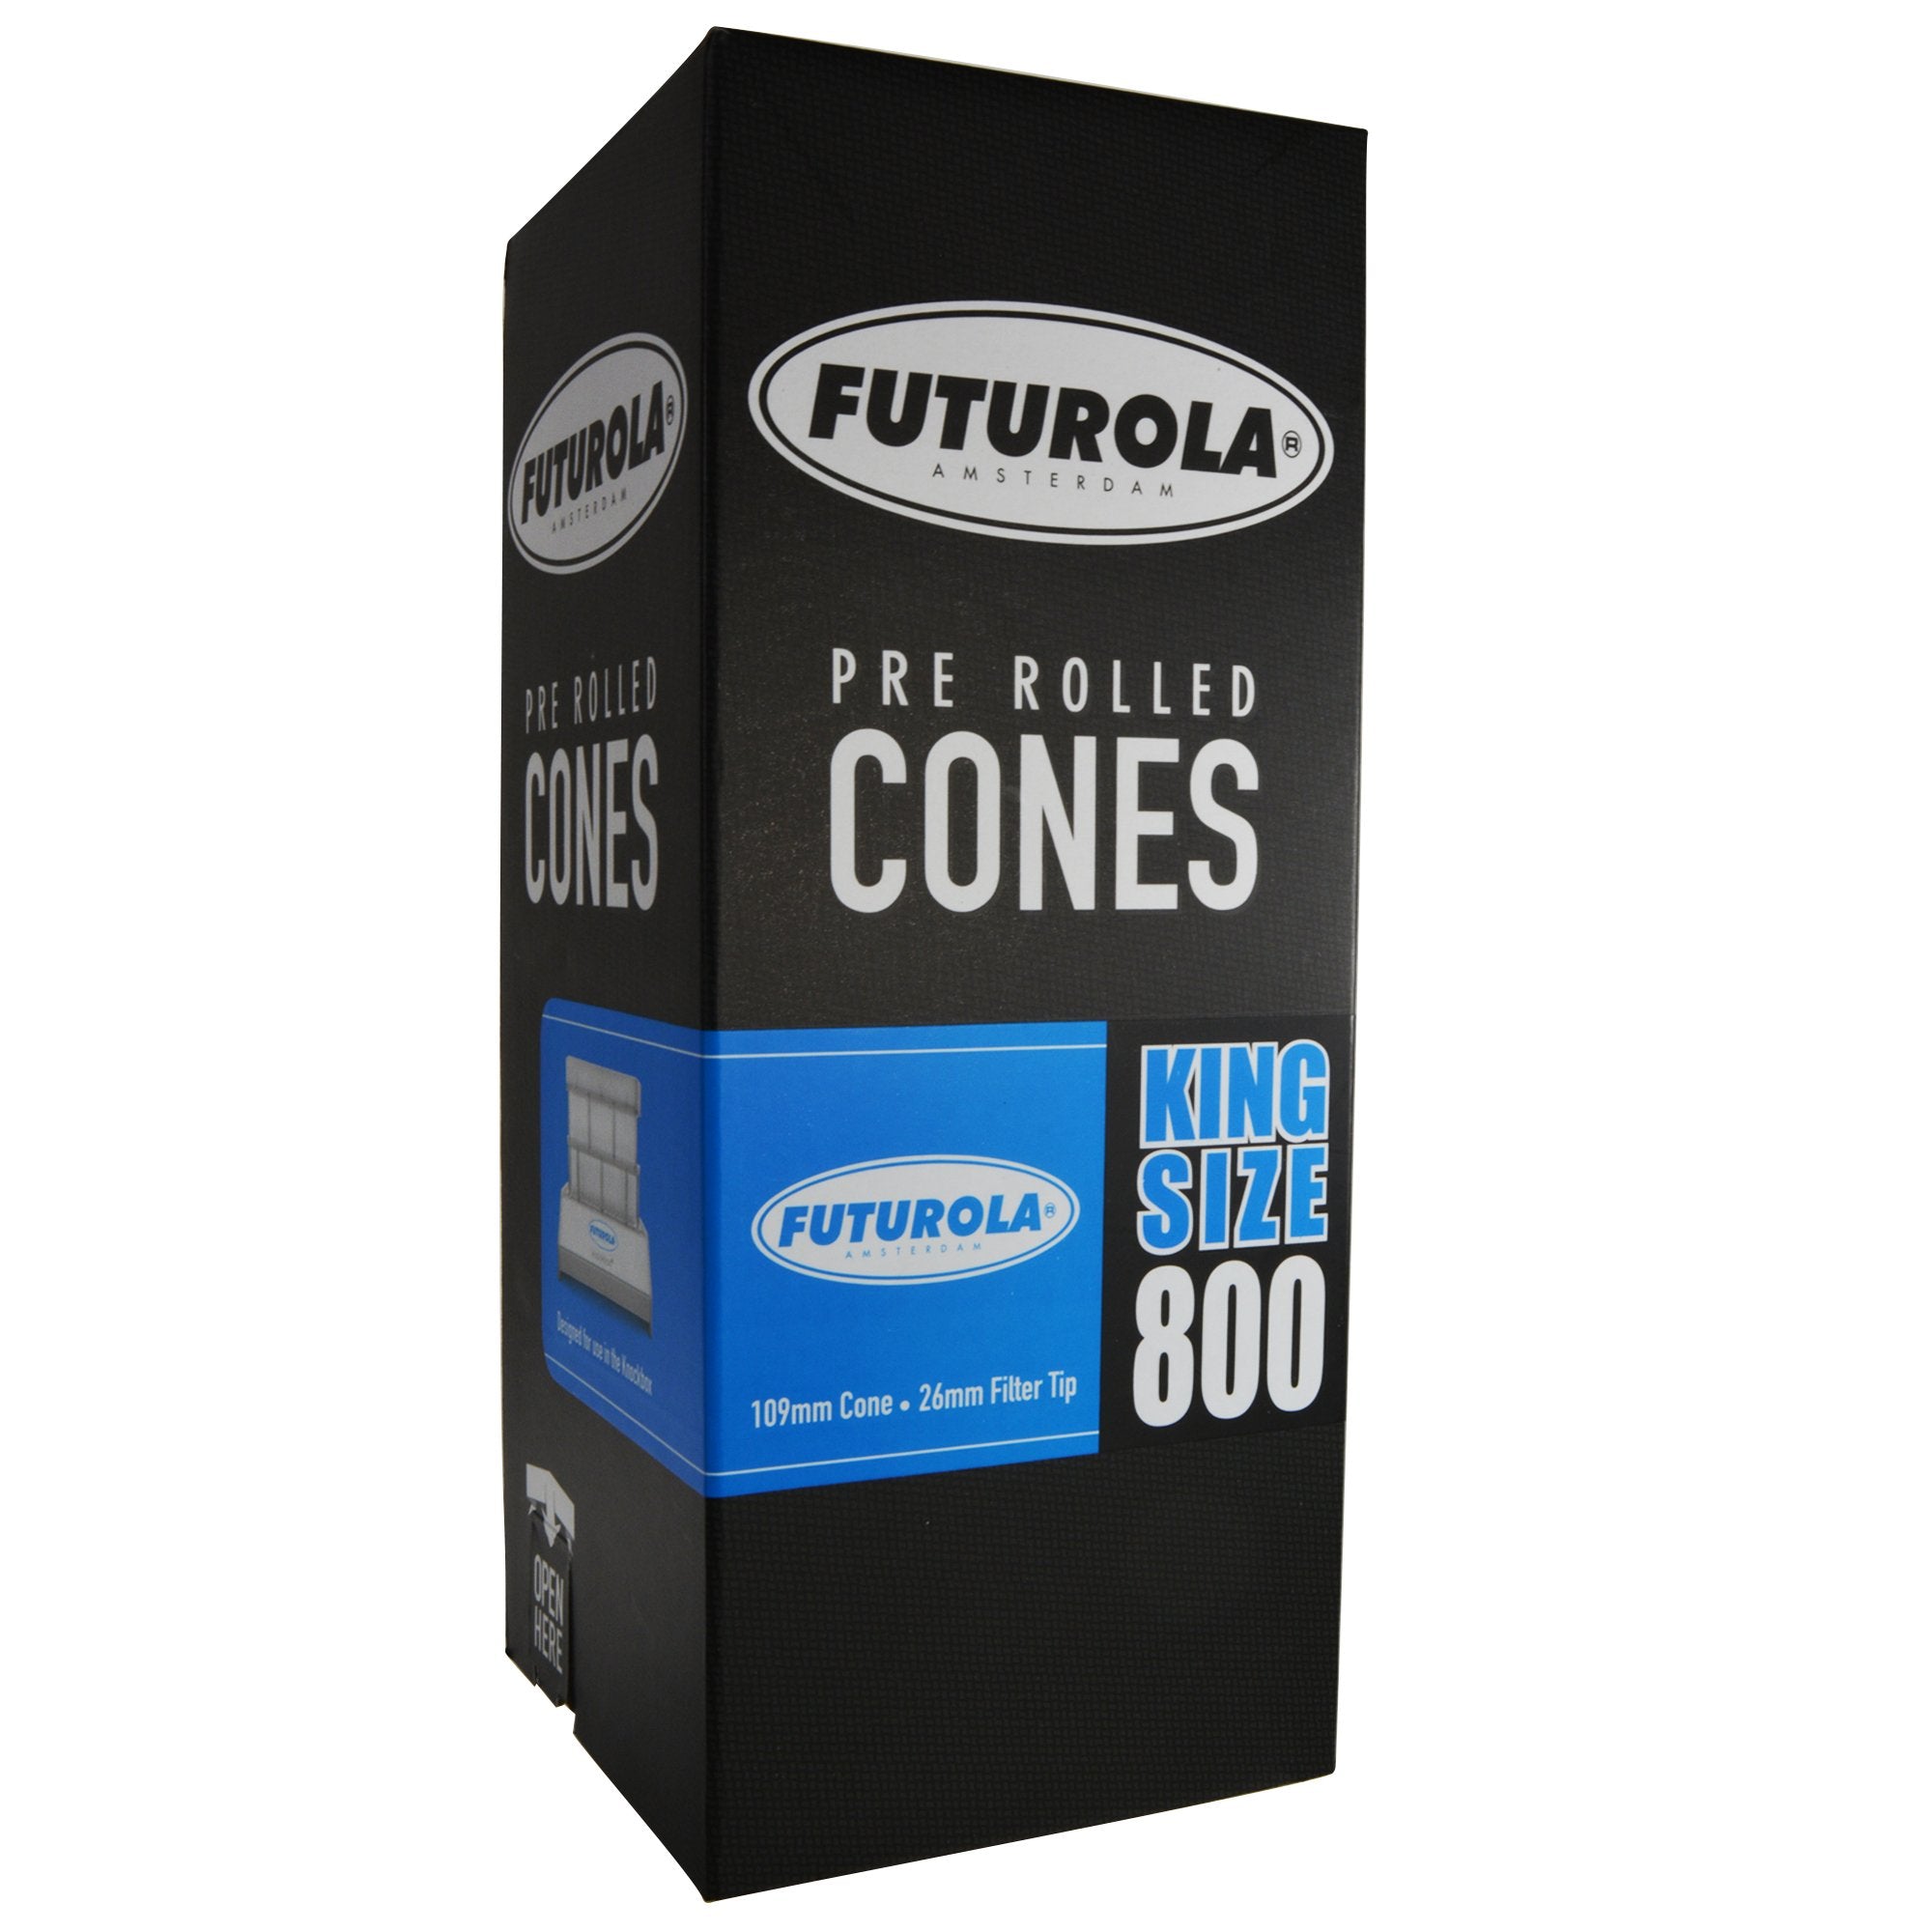 FUTUROLA | King Size Pre-Rolled Cones | 109mm - Classic White Paper - 800 Count - 1